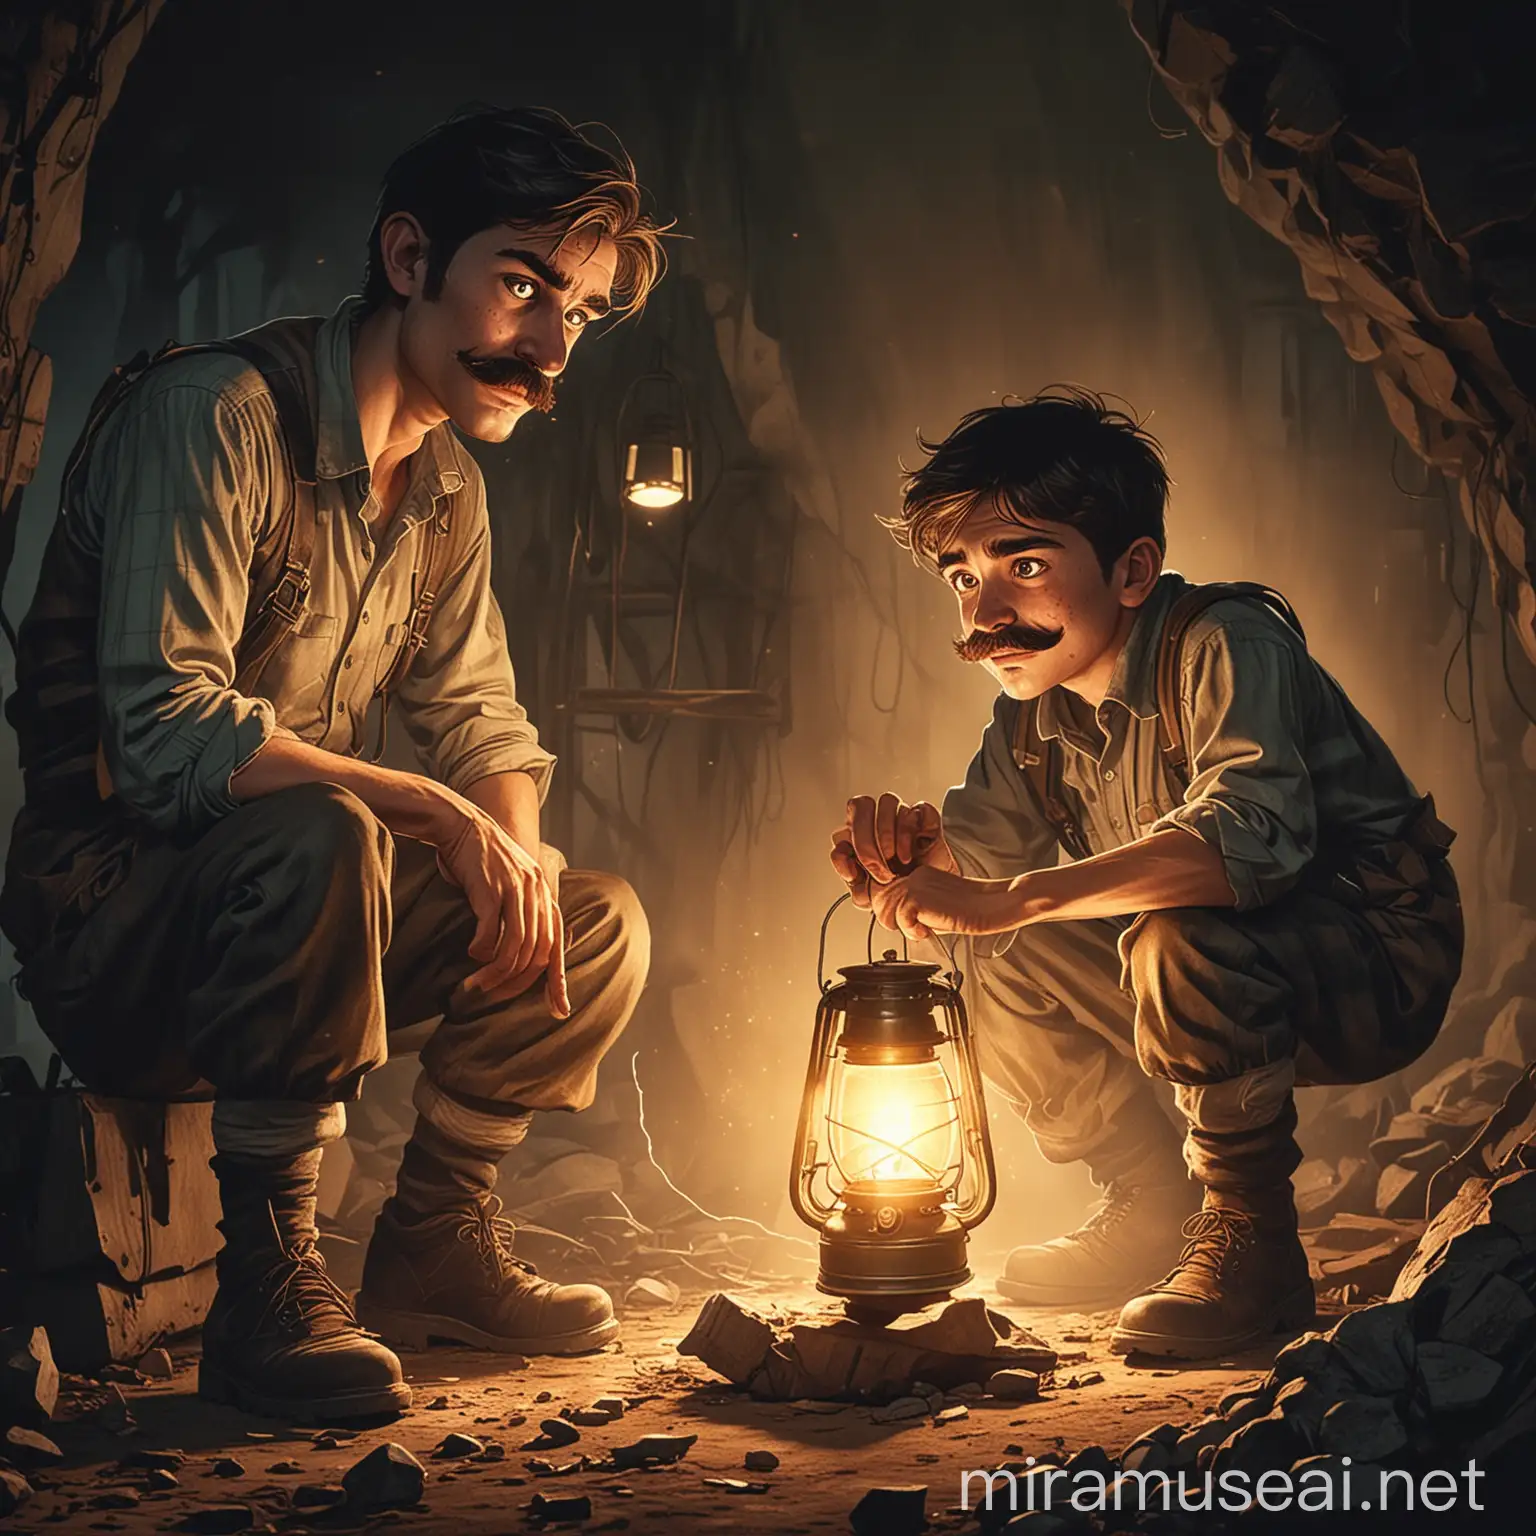 Illustration of a Teenage Boy Helping a Man with a Broken Leg in a Dark Mine